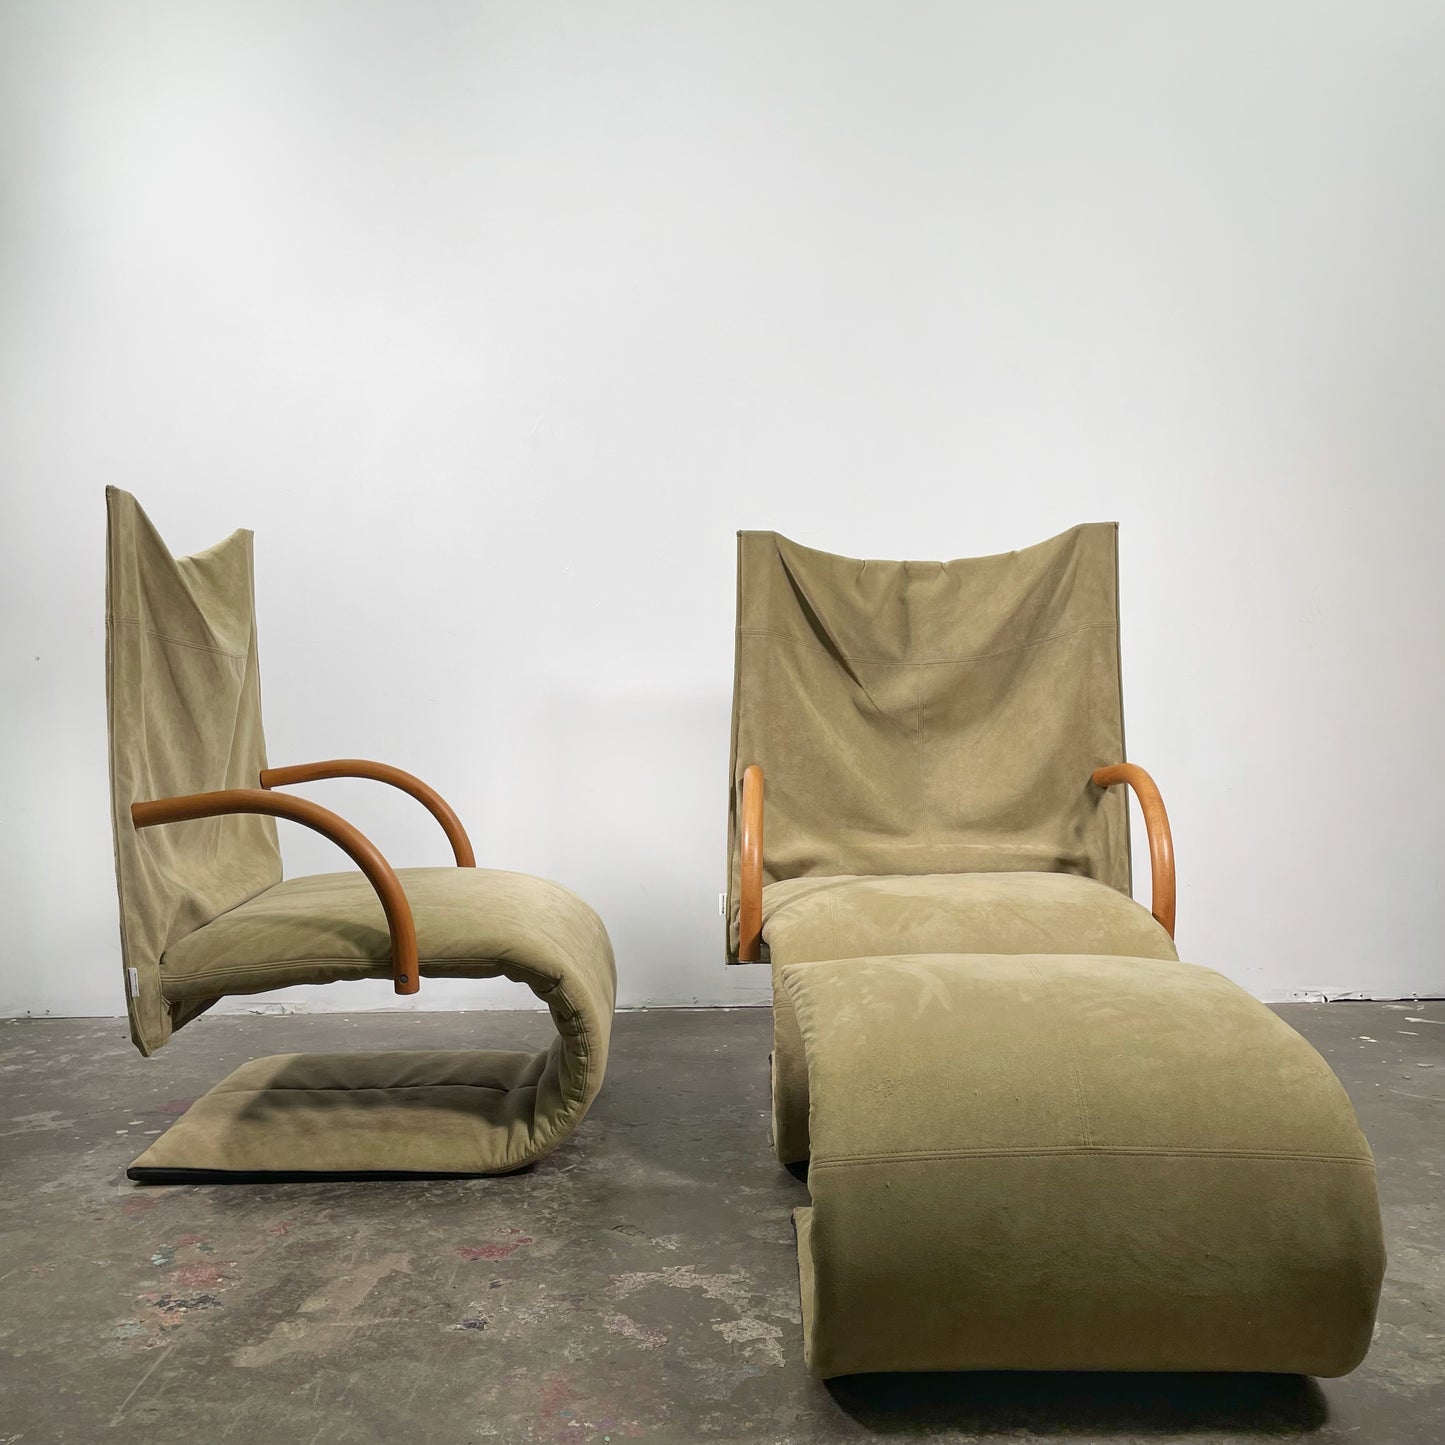 Zen Chairs by Claude Brisson for Ligne Roset